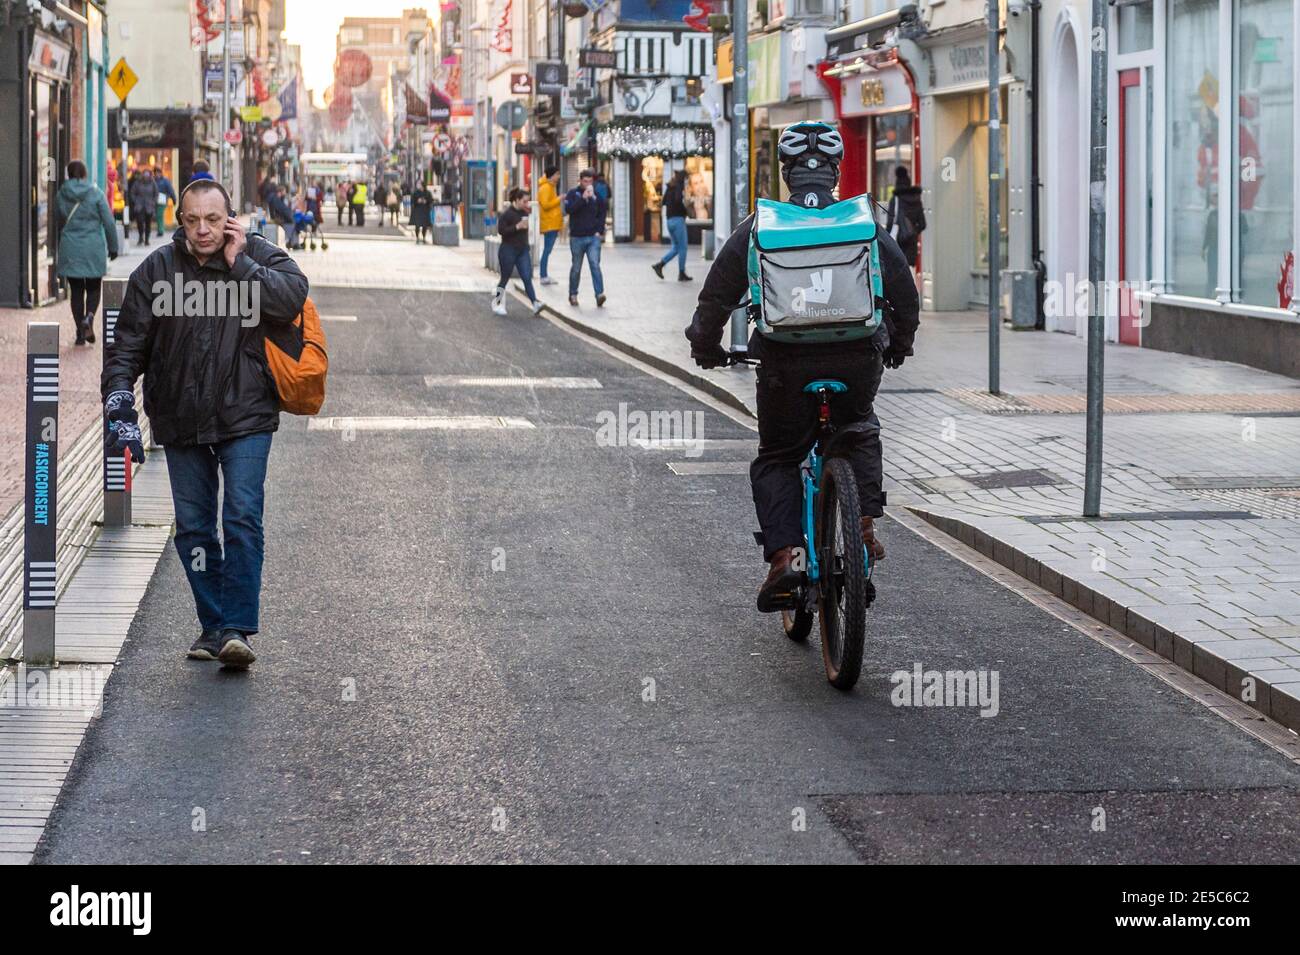 Deliveroo food delivery rider in Cork city, Ireland. Stock Photo